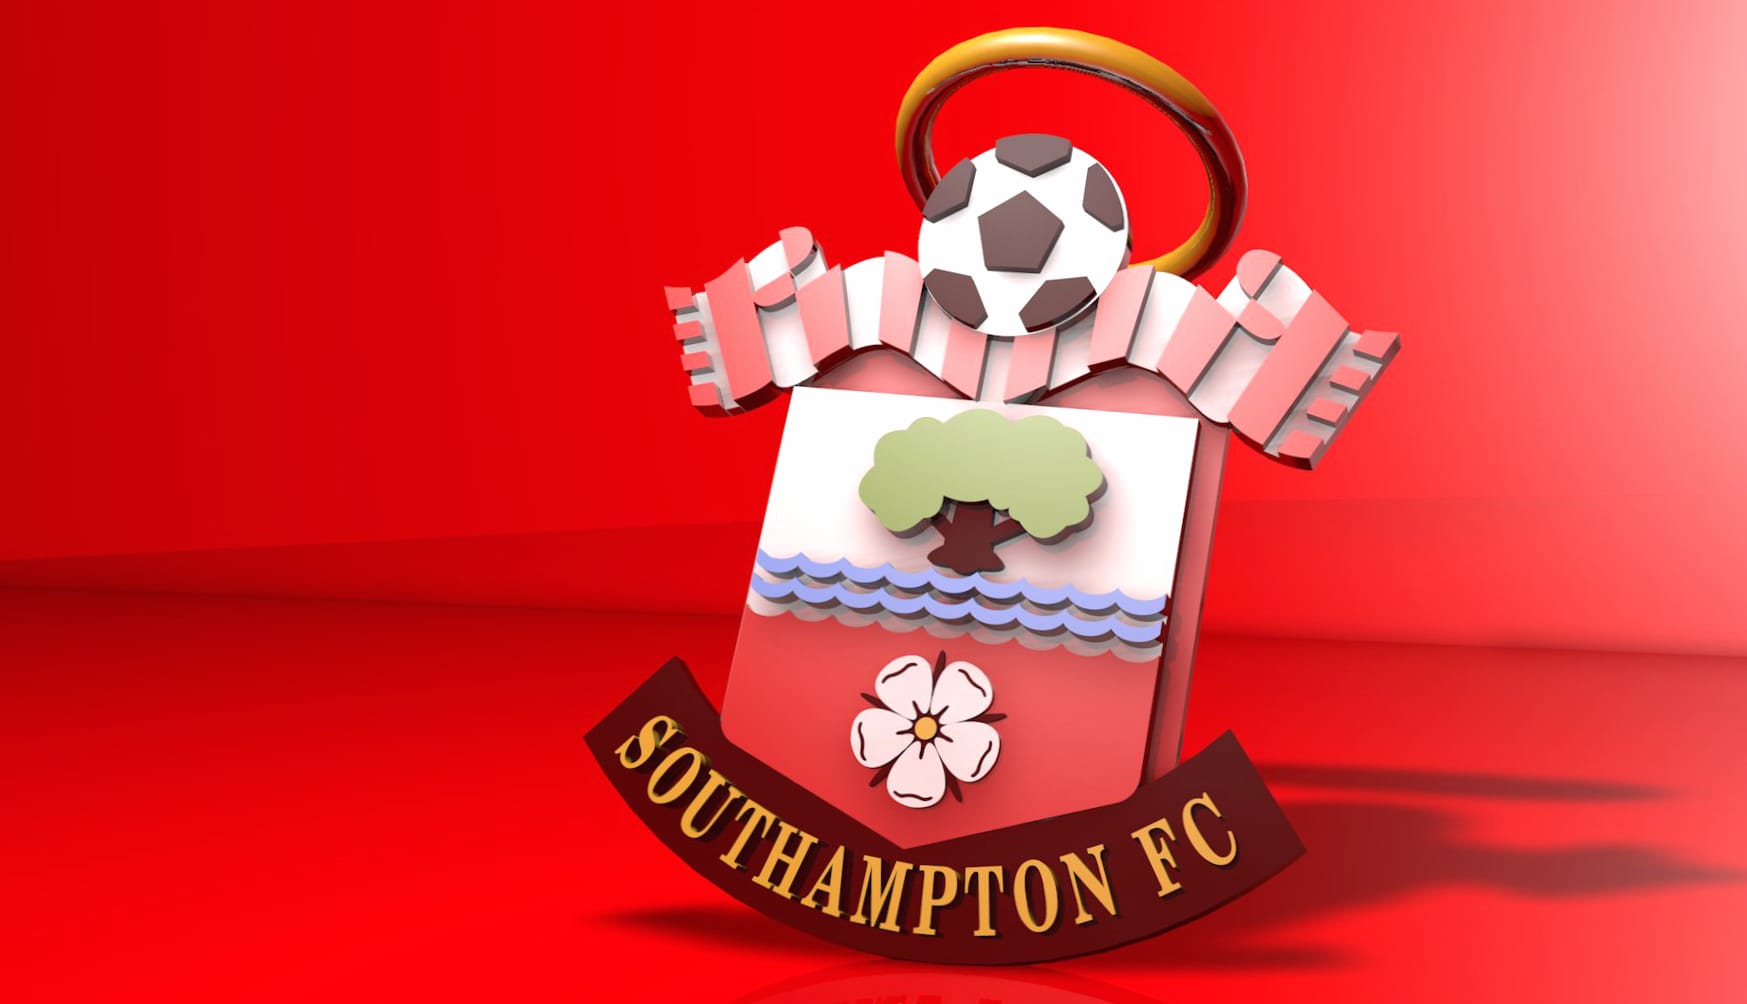 Southampton F.C wallpapers HD quality